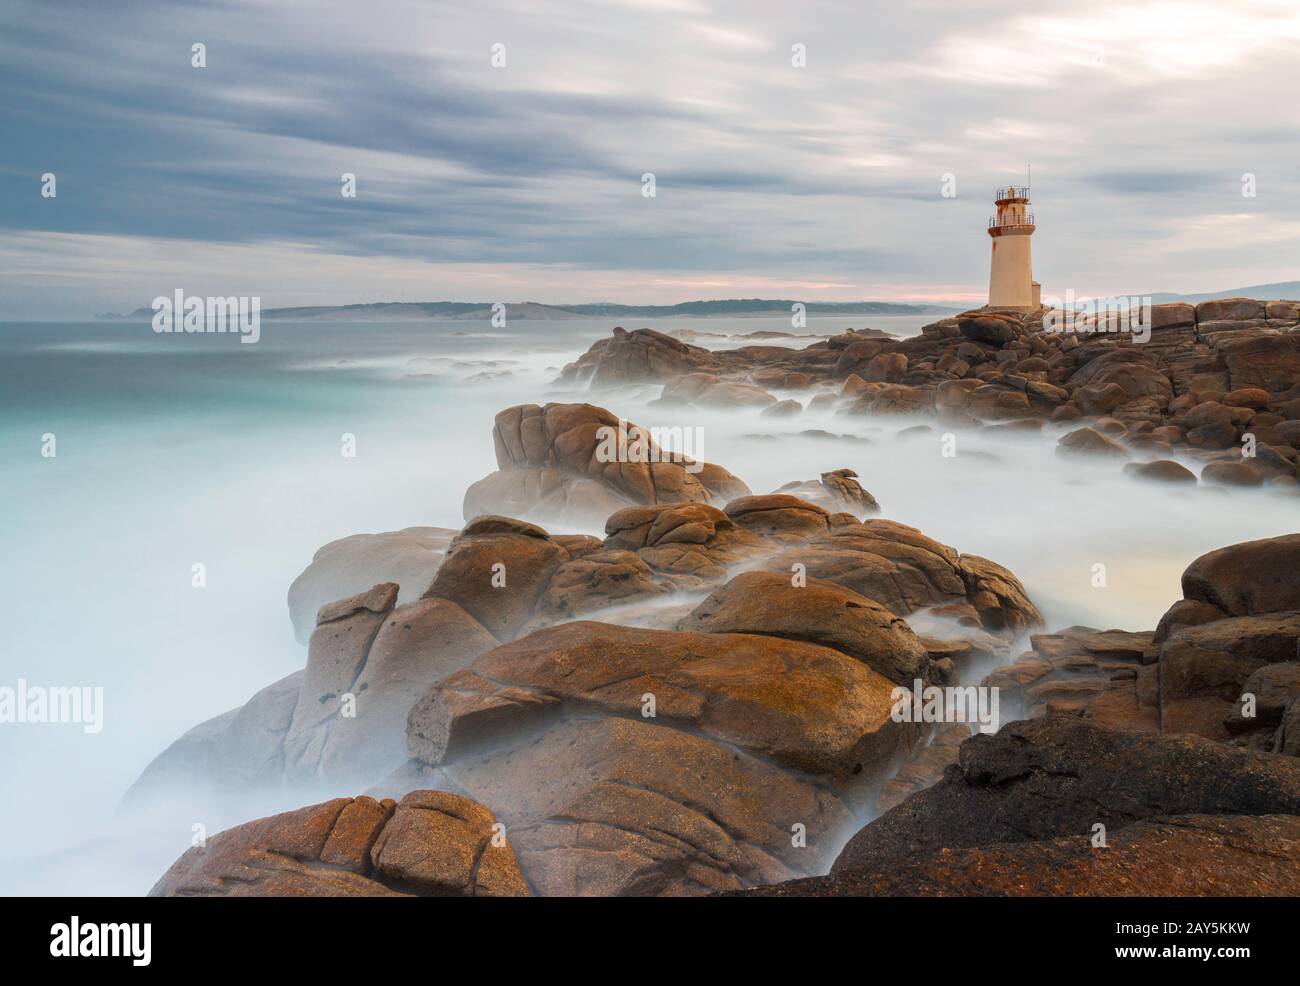 Long exposure at Muxia lighthouse, Muxia,A Coruna, Galcia, Spain, Iberian Peninsula, Western Europe Stock Photo